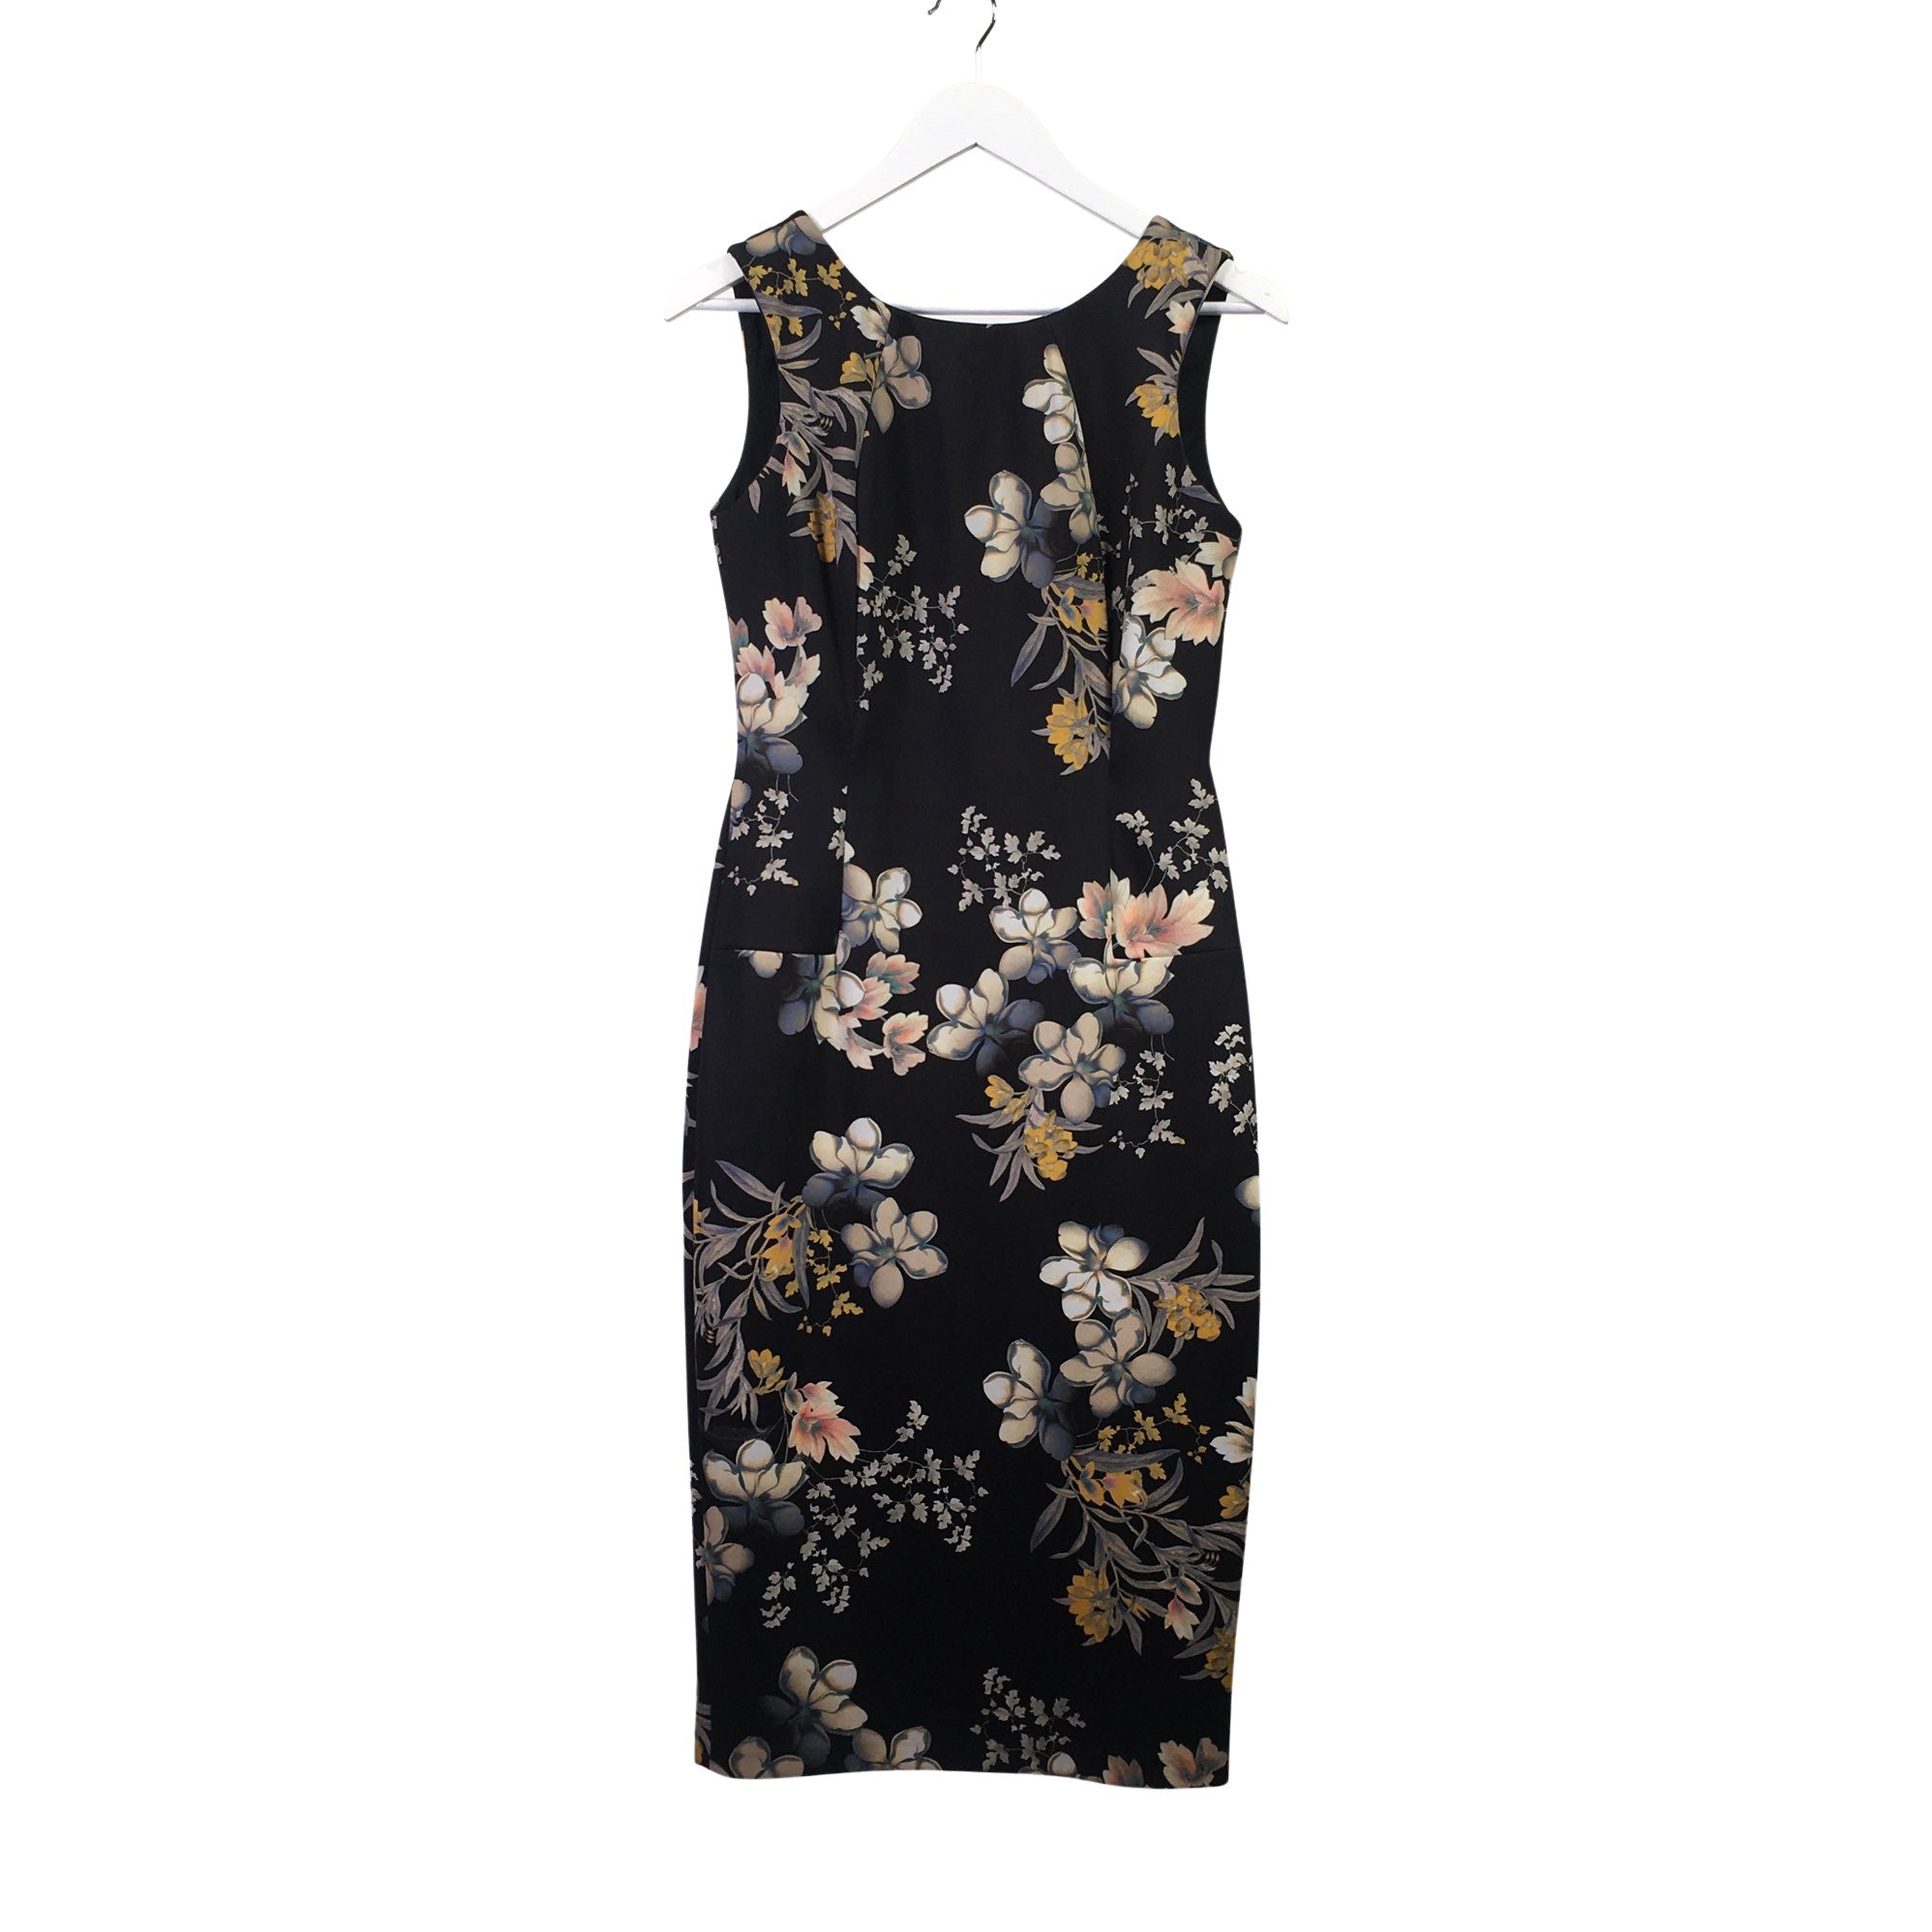 Women's M&S Collection Dress, size 38 (Black)